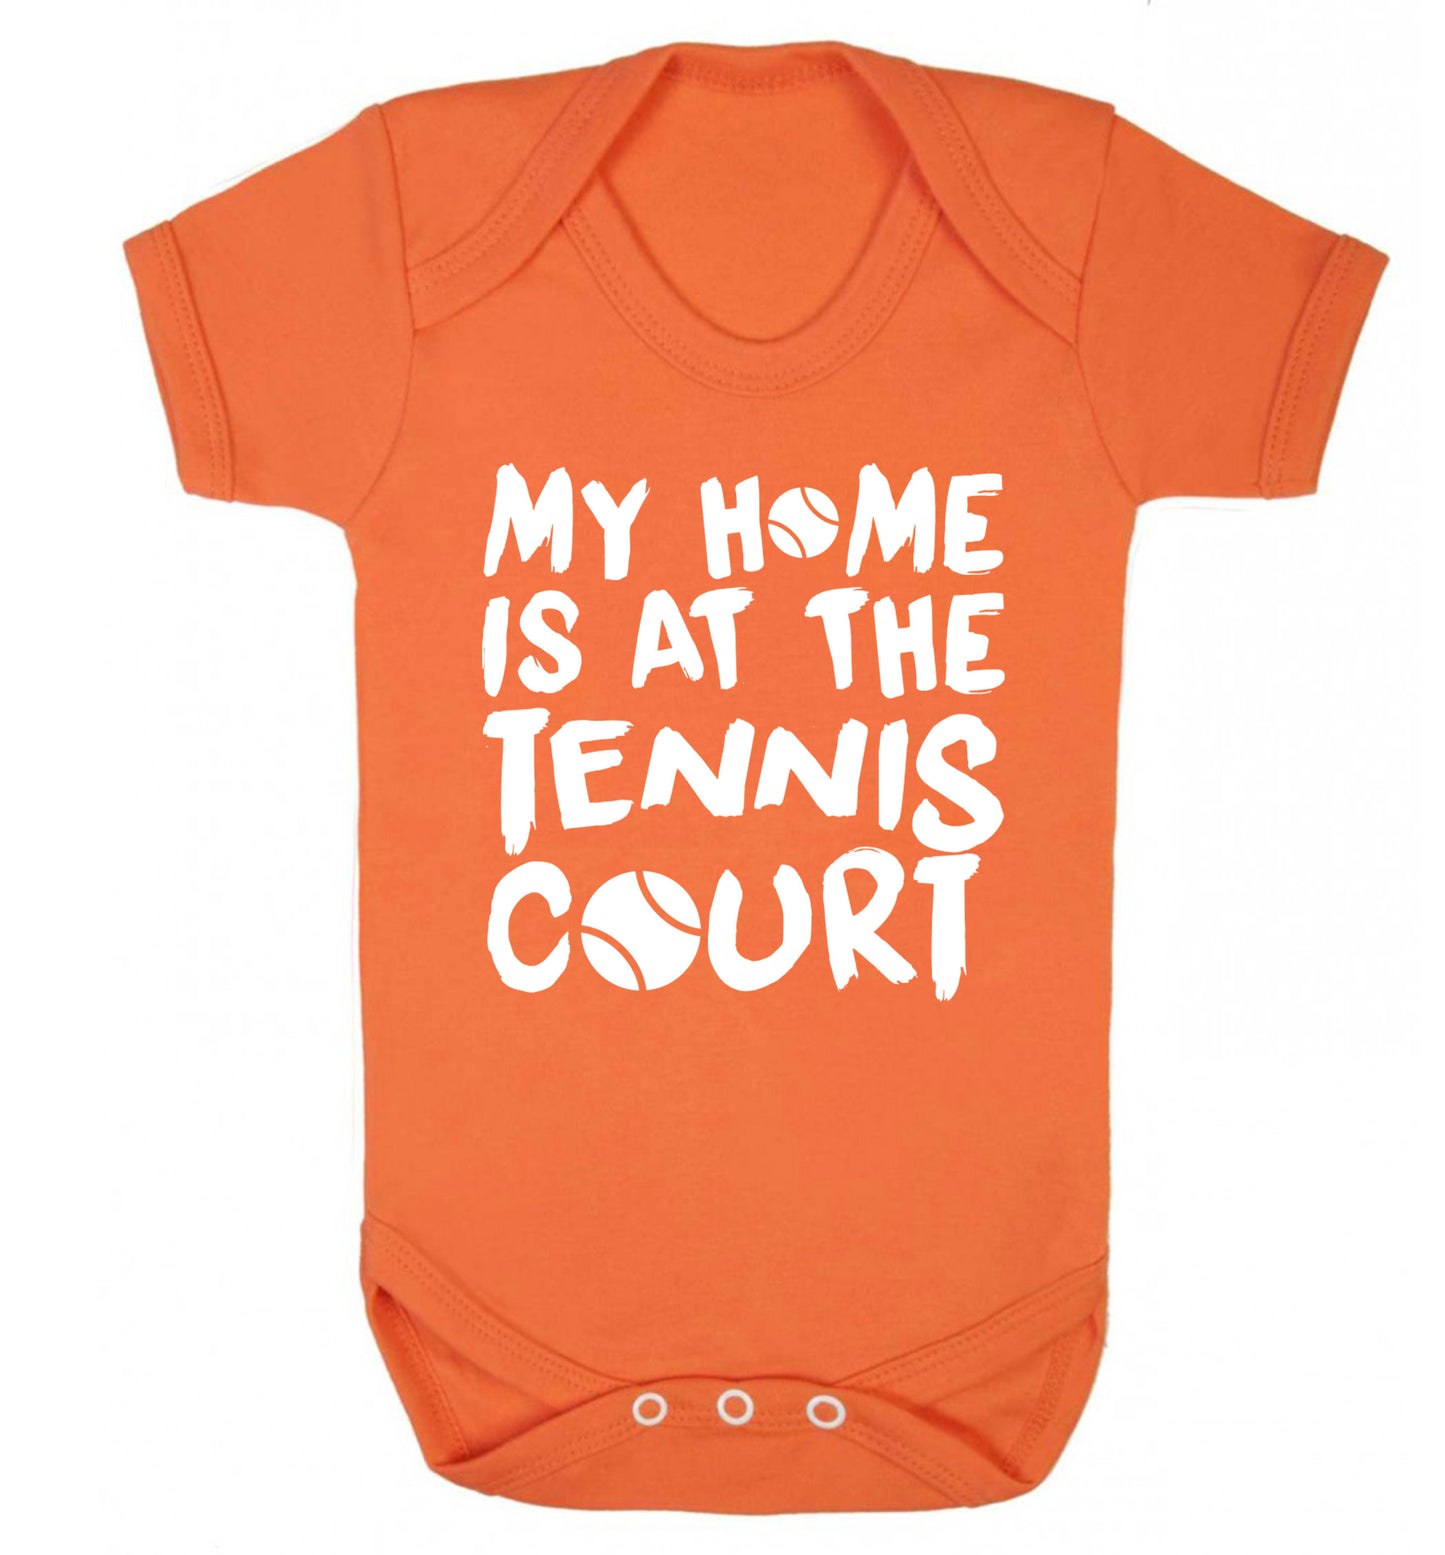 My home is at the tennis court Baby Vest orange 18-24 months